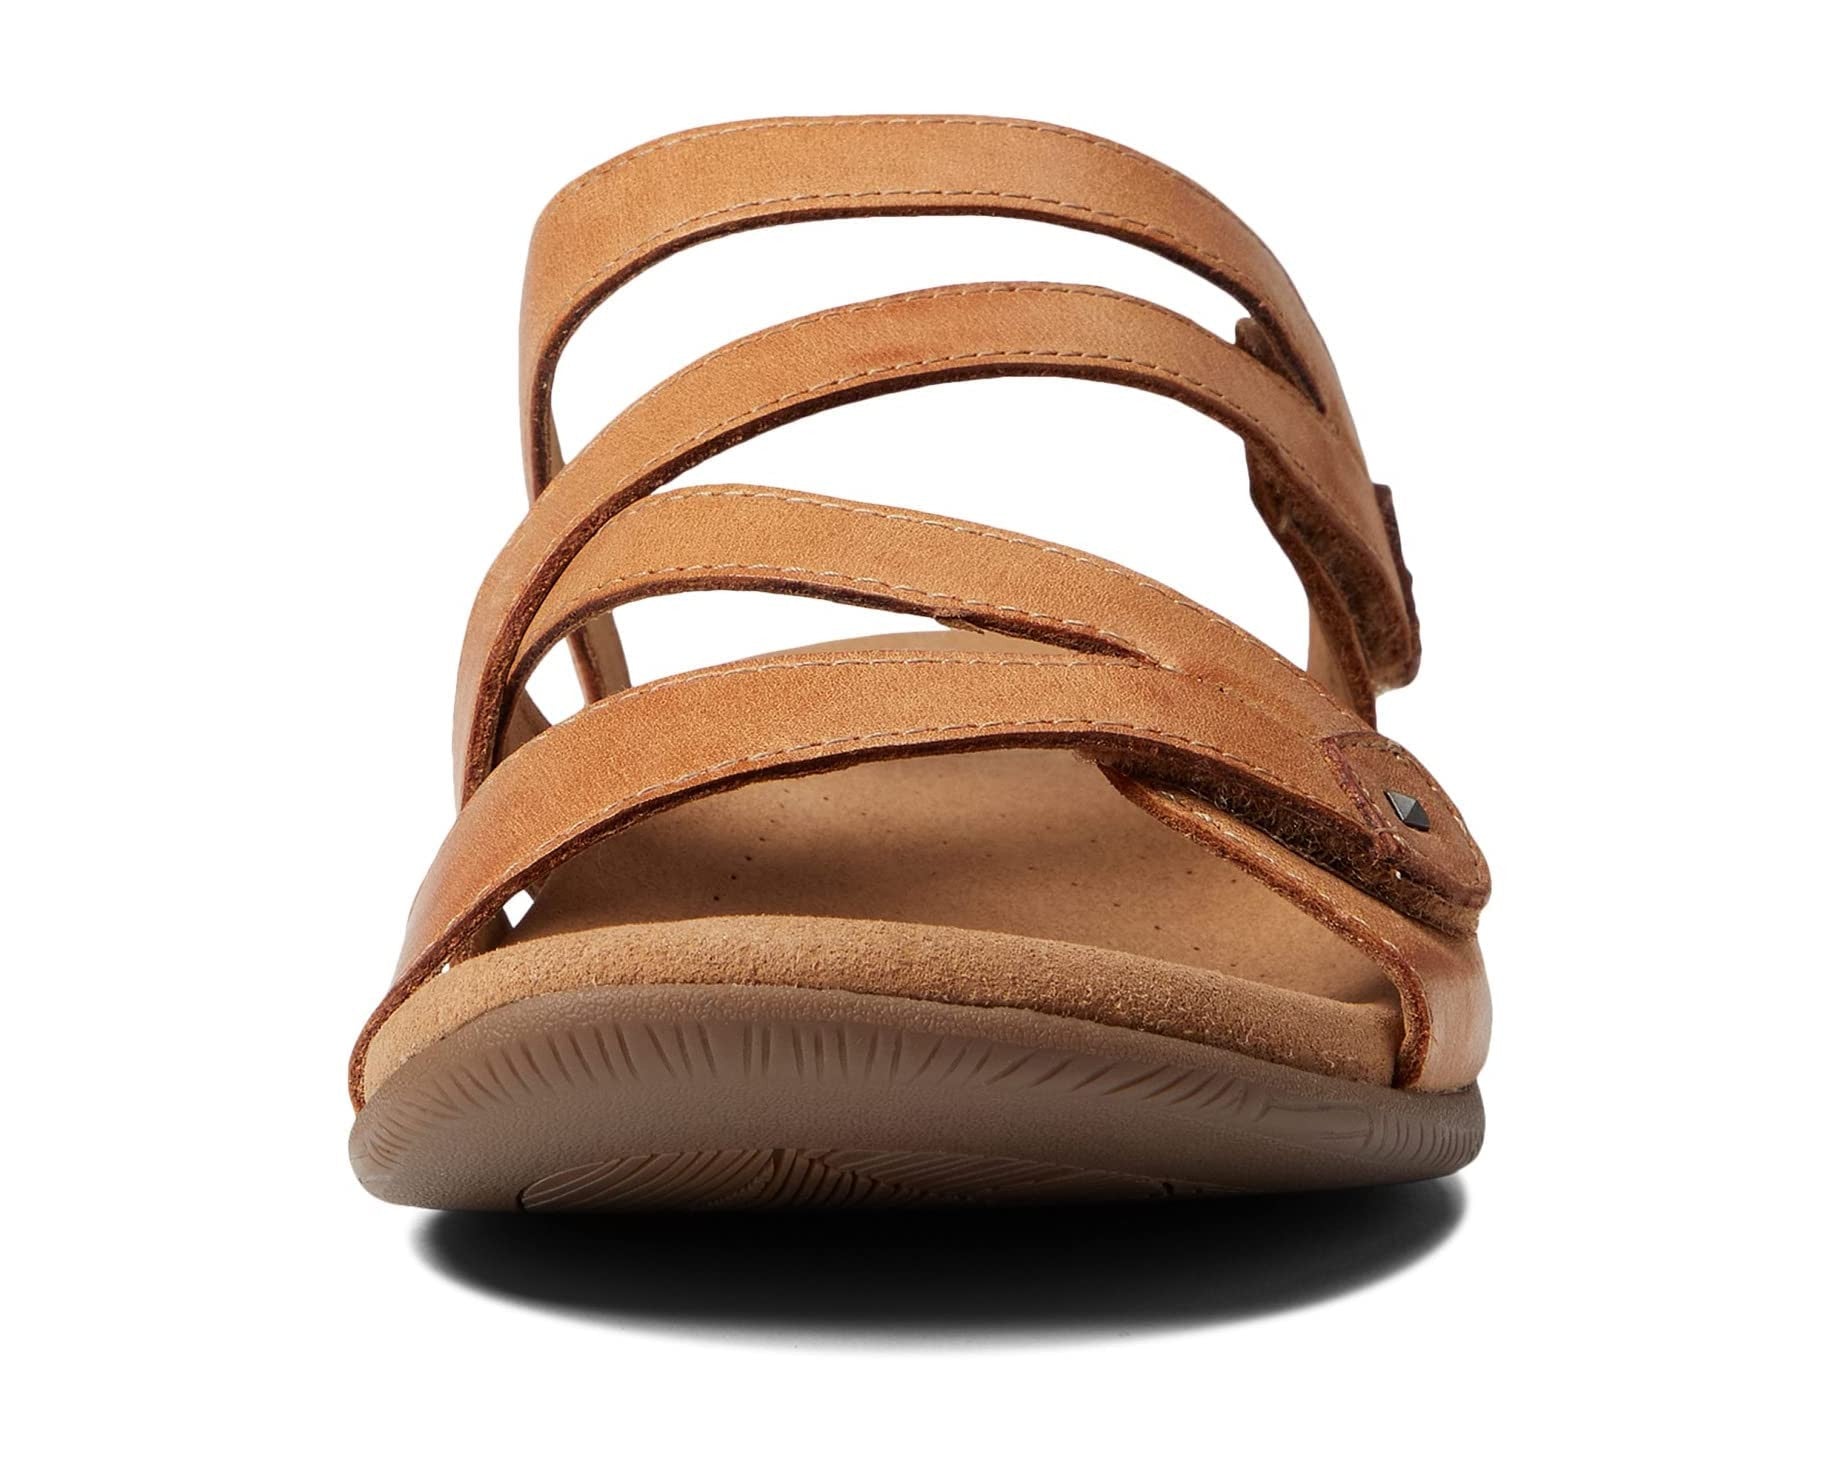 Double U | Leather | Caramel - Sandals - Taos